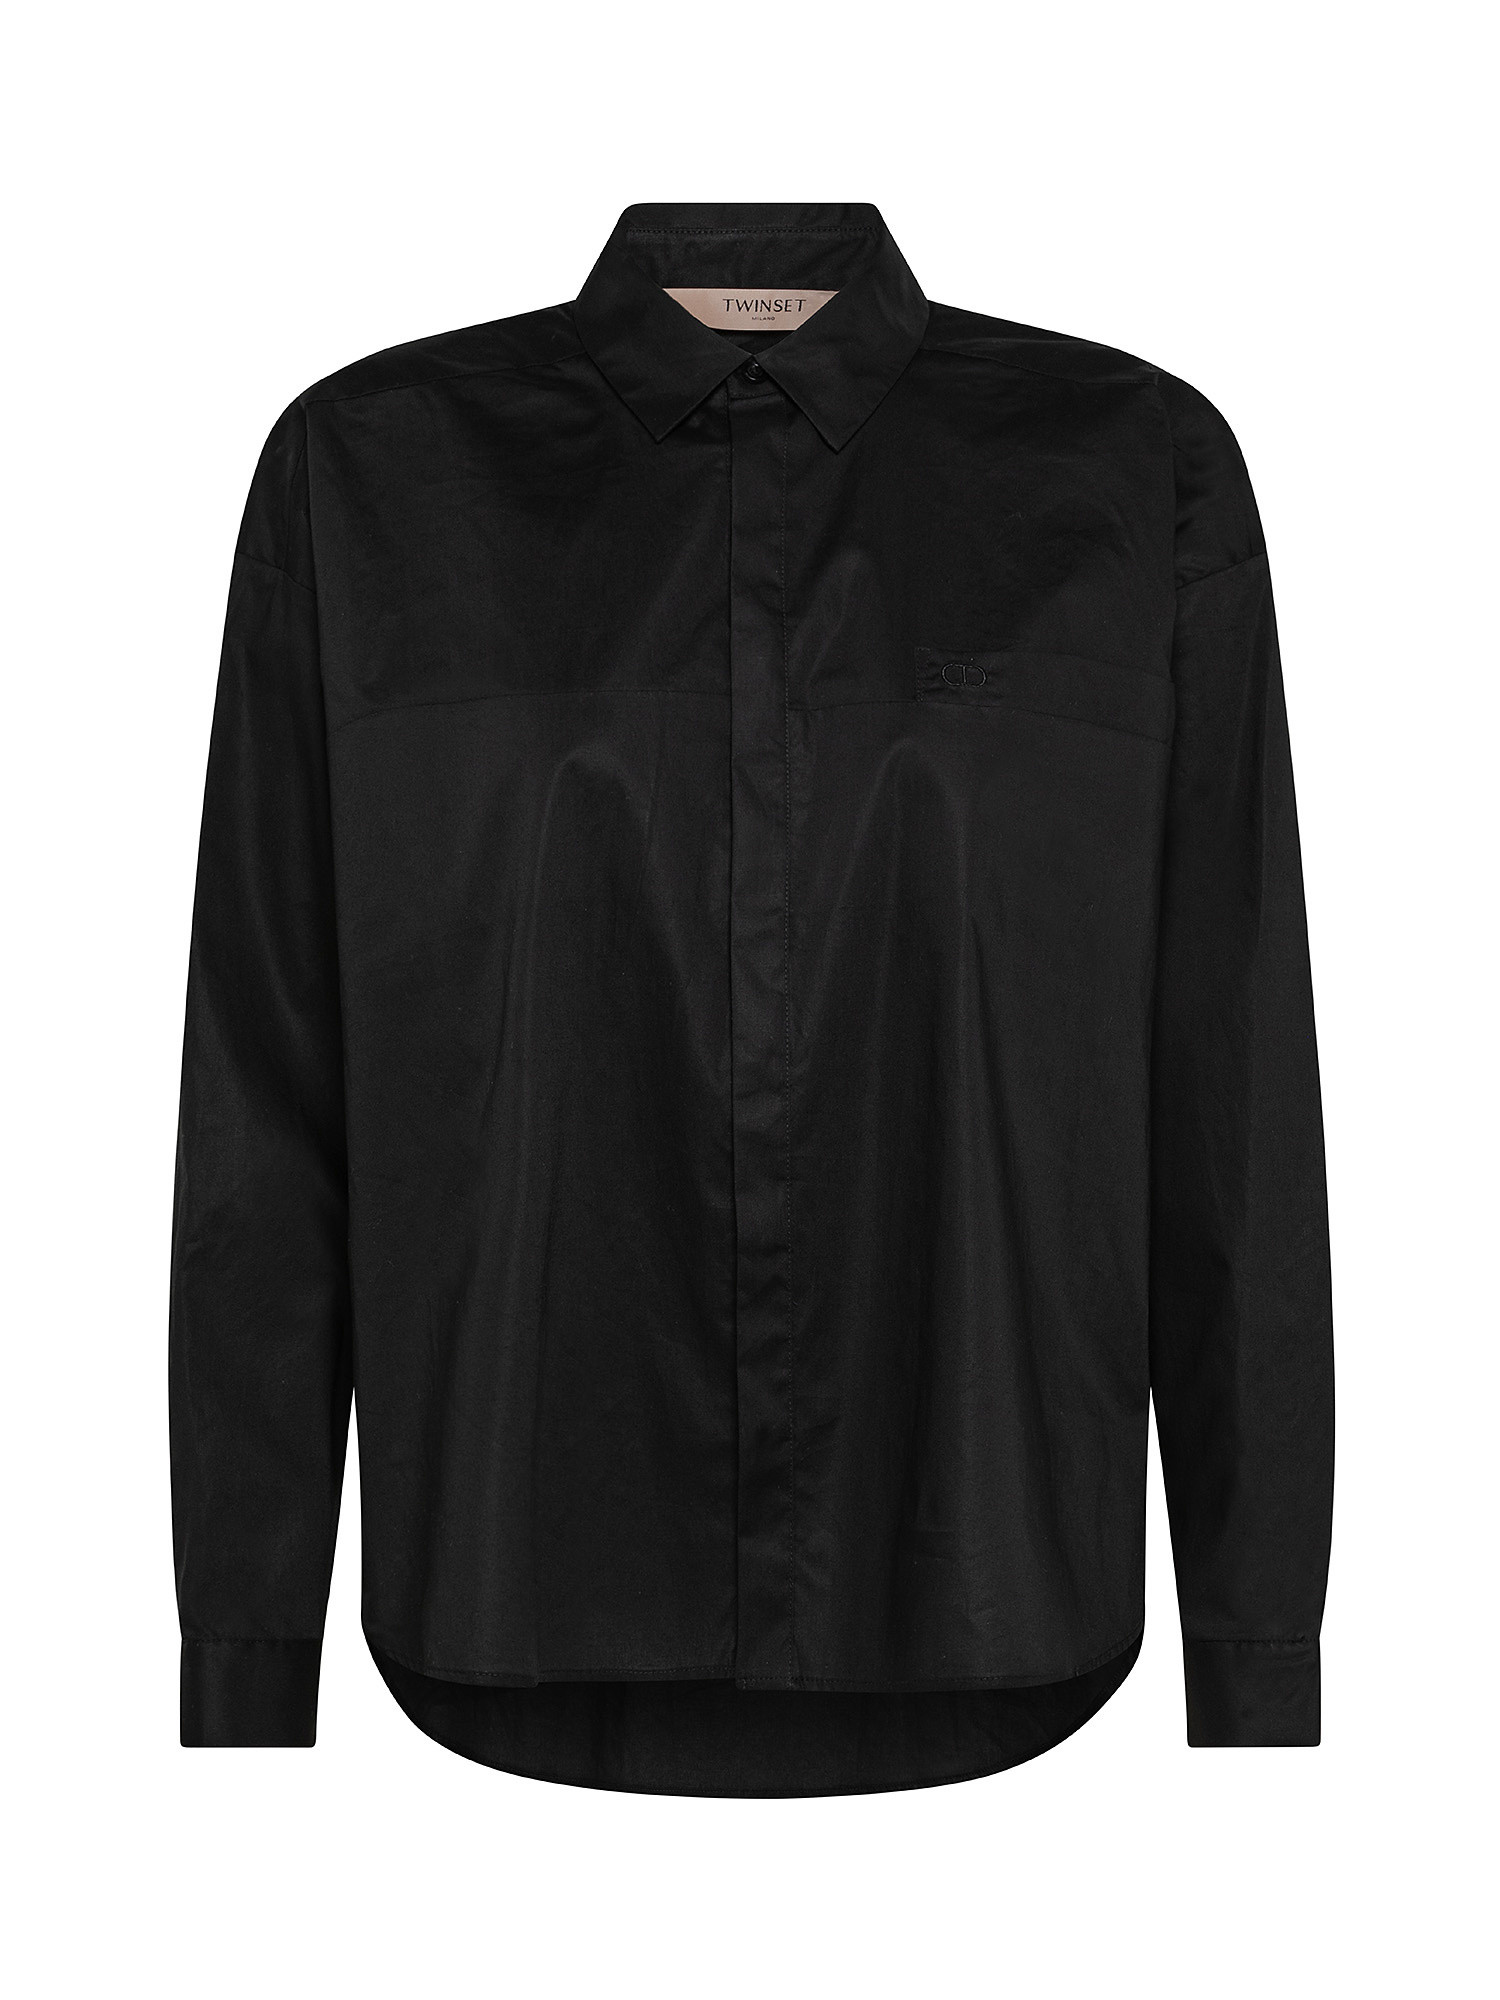 Shirt, Black, large image number 0